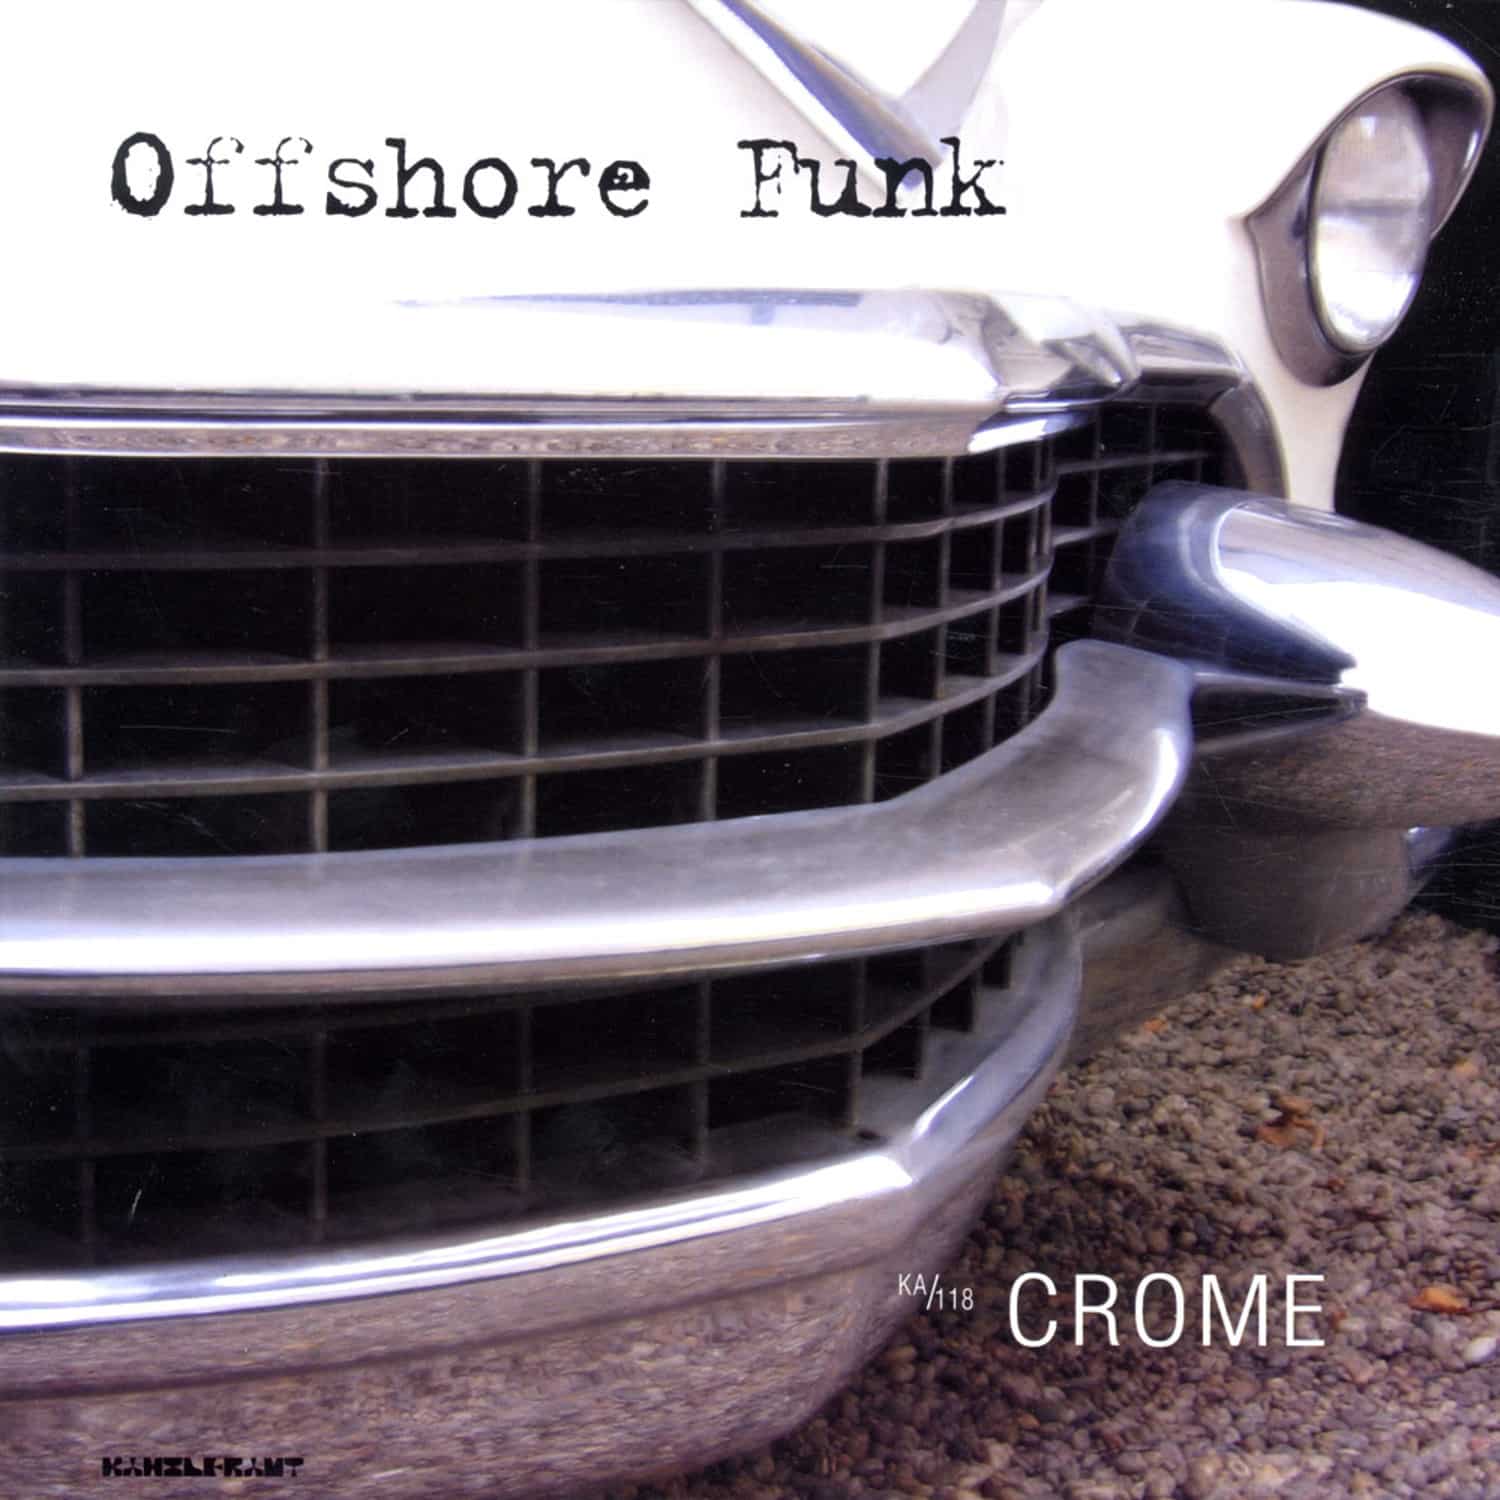 Offshore Funk - CROME 